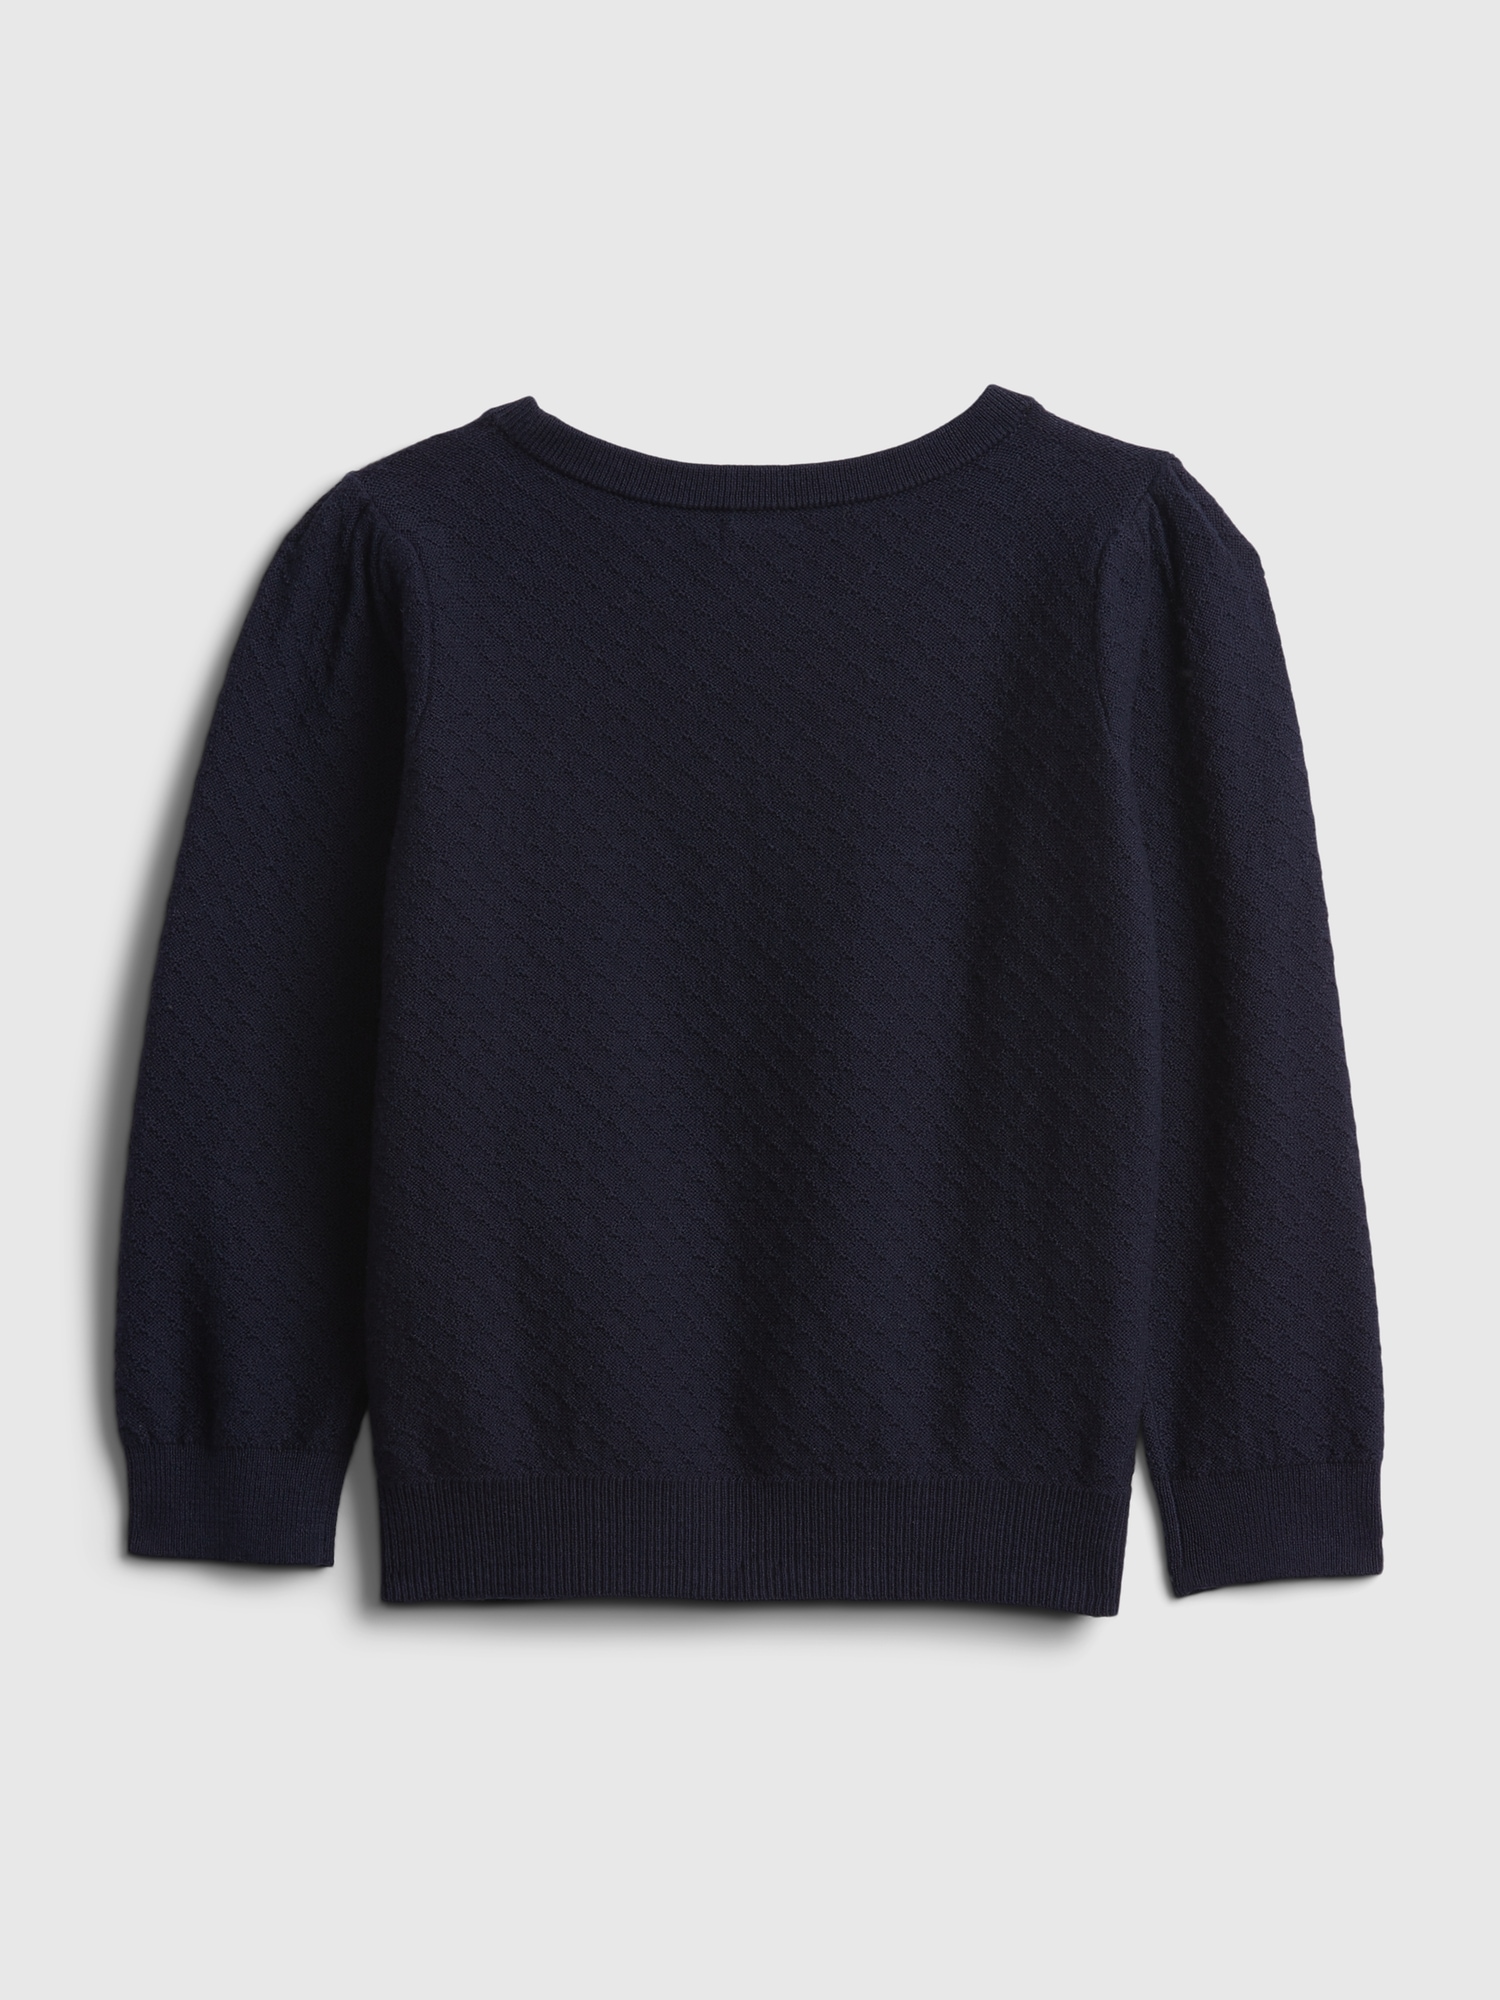 Toddler Pleated Sleeve Crewneck Sweater | Gap